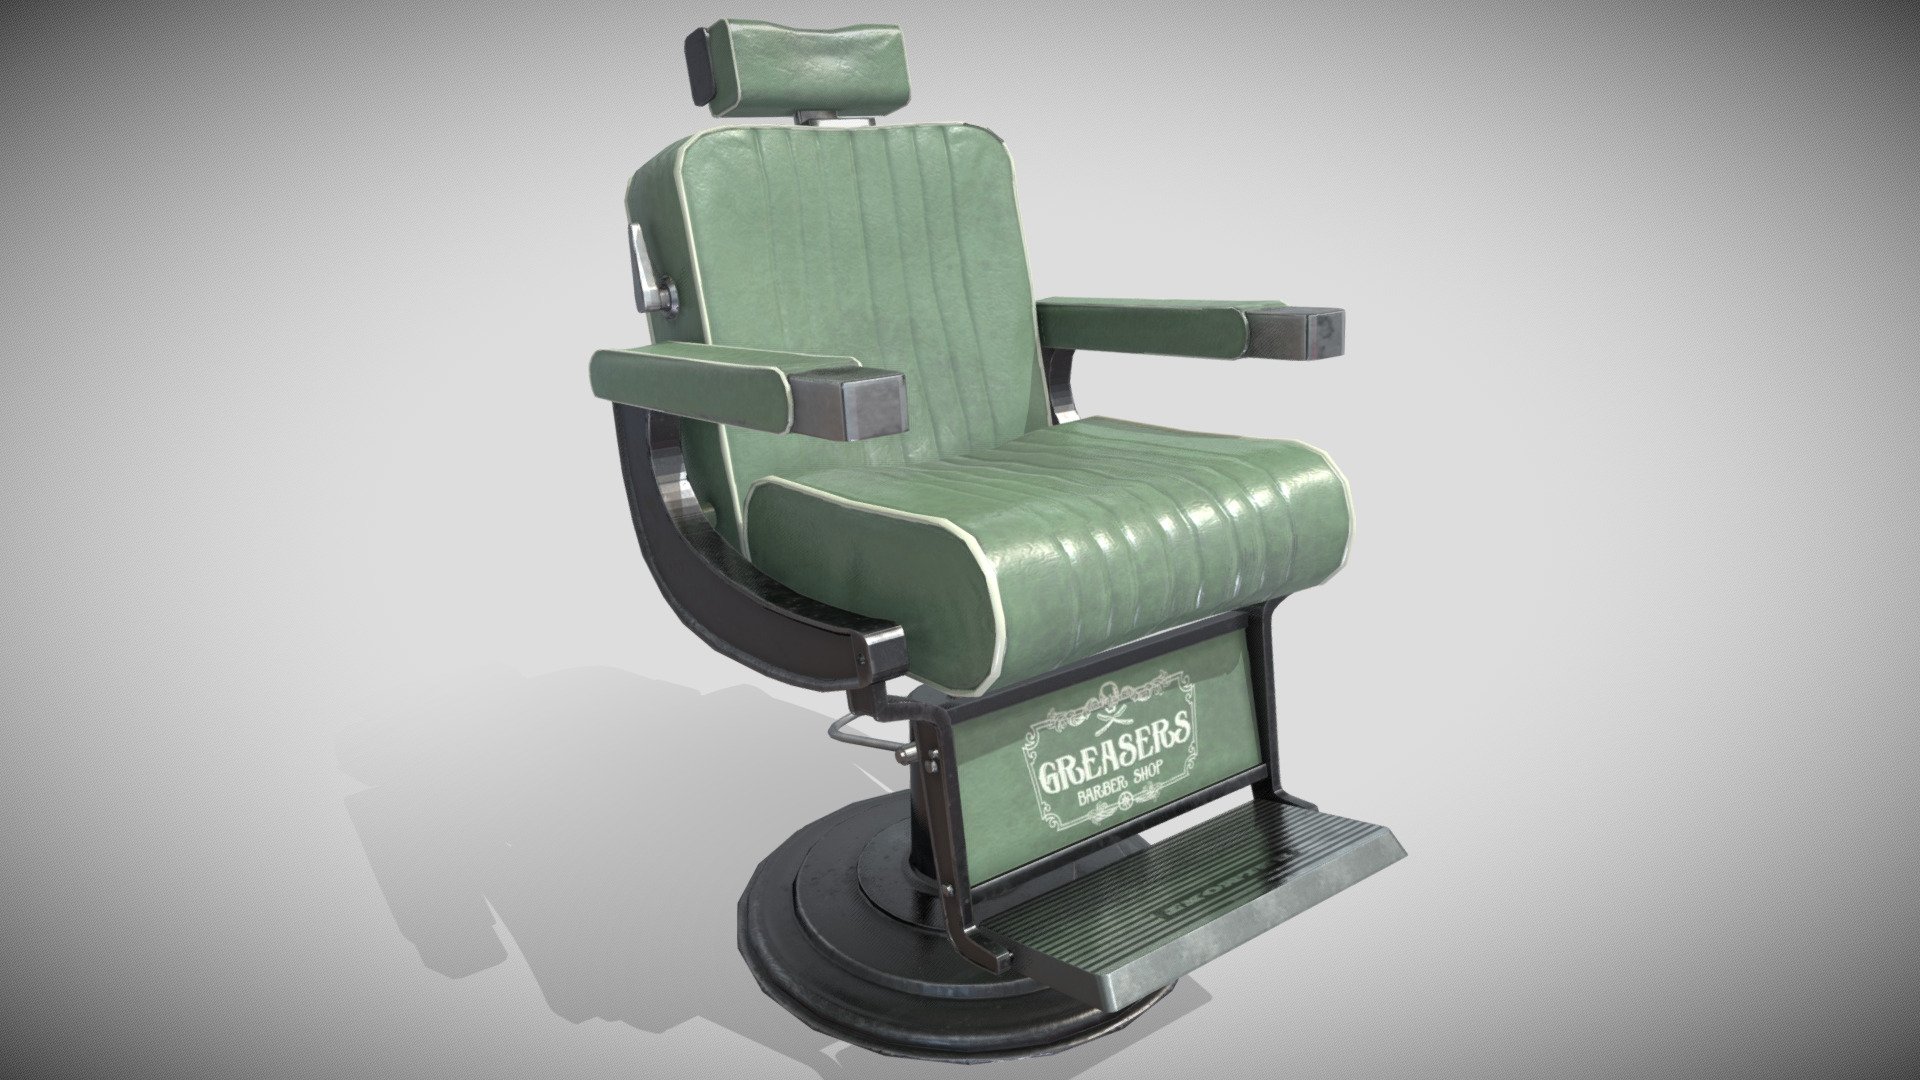 WIP Barbershop Chair for a 3D Barbershop environment being made in UE4 - Barbershop Chair Asset - 3D model by Lucas Street (@FWlucasstreet) 3d model